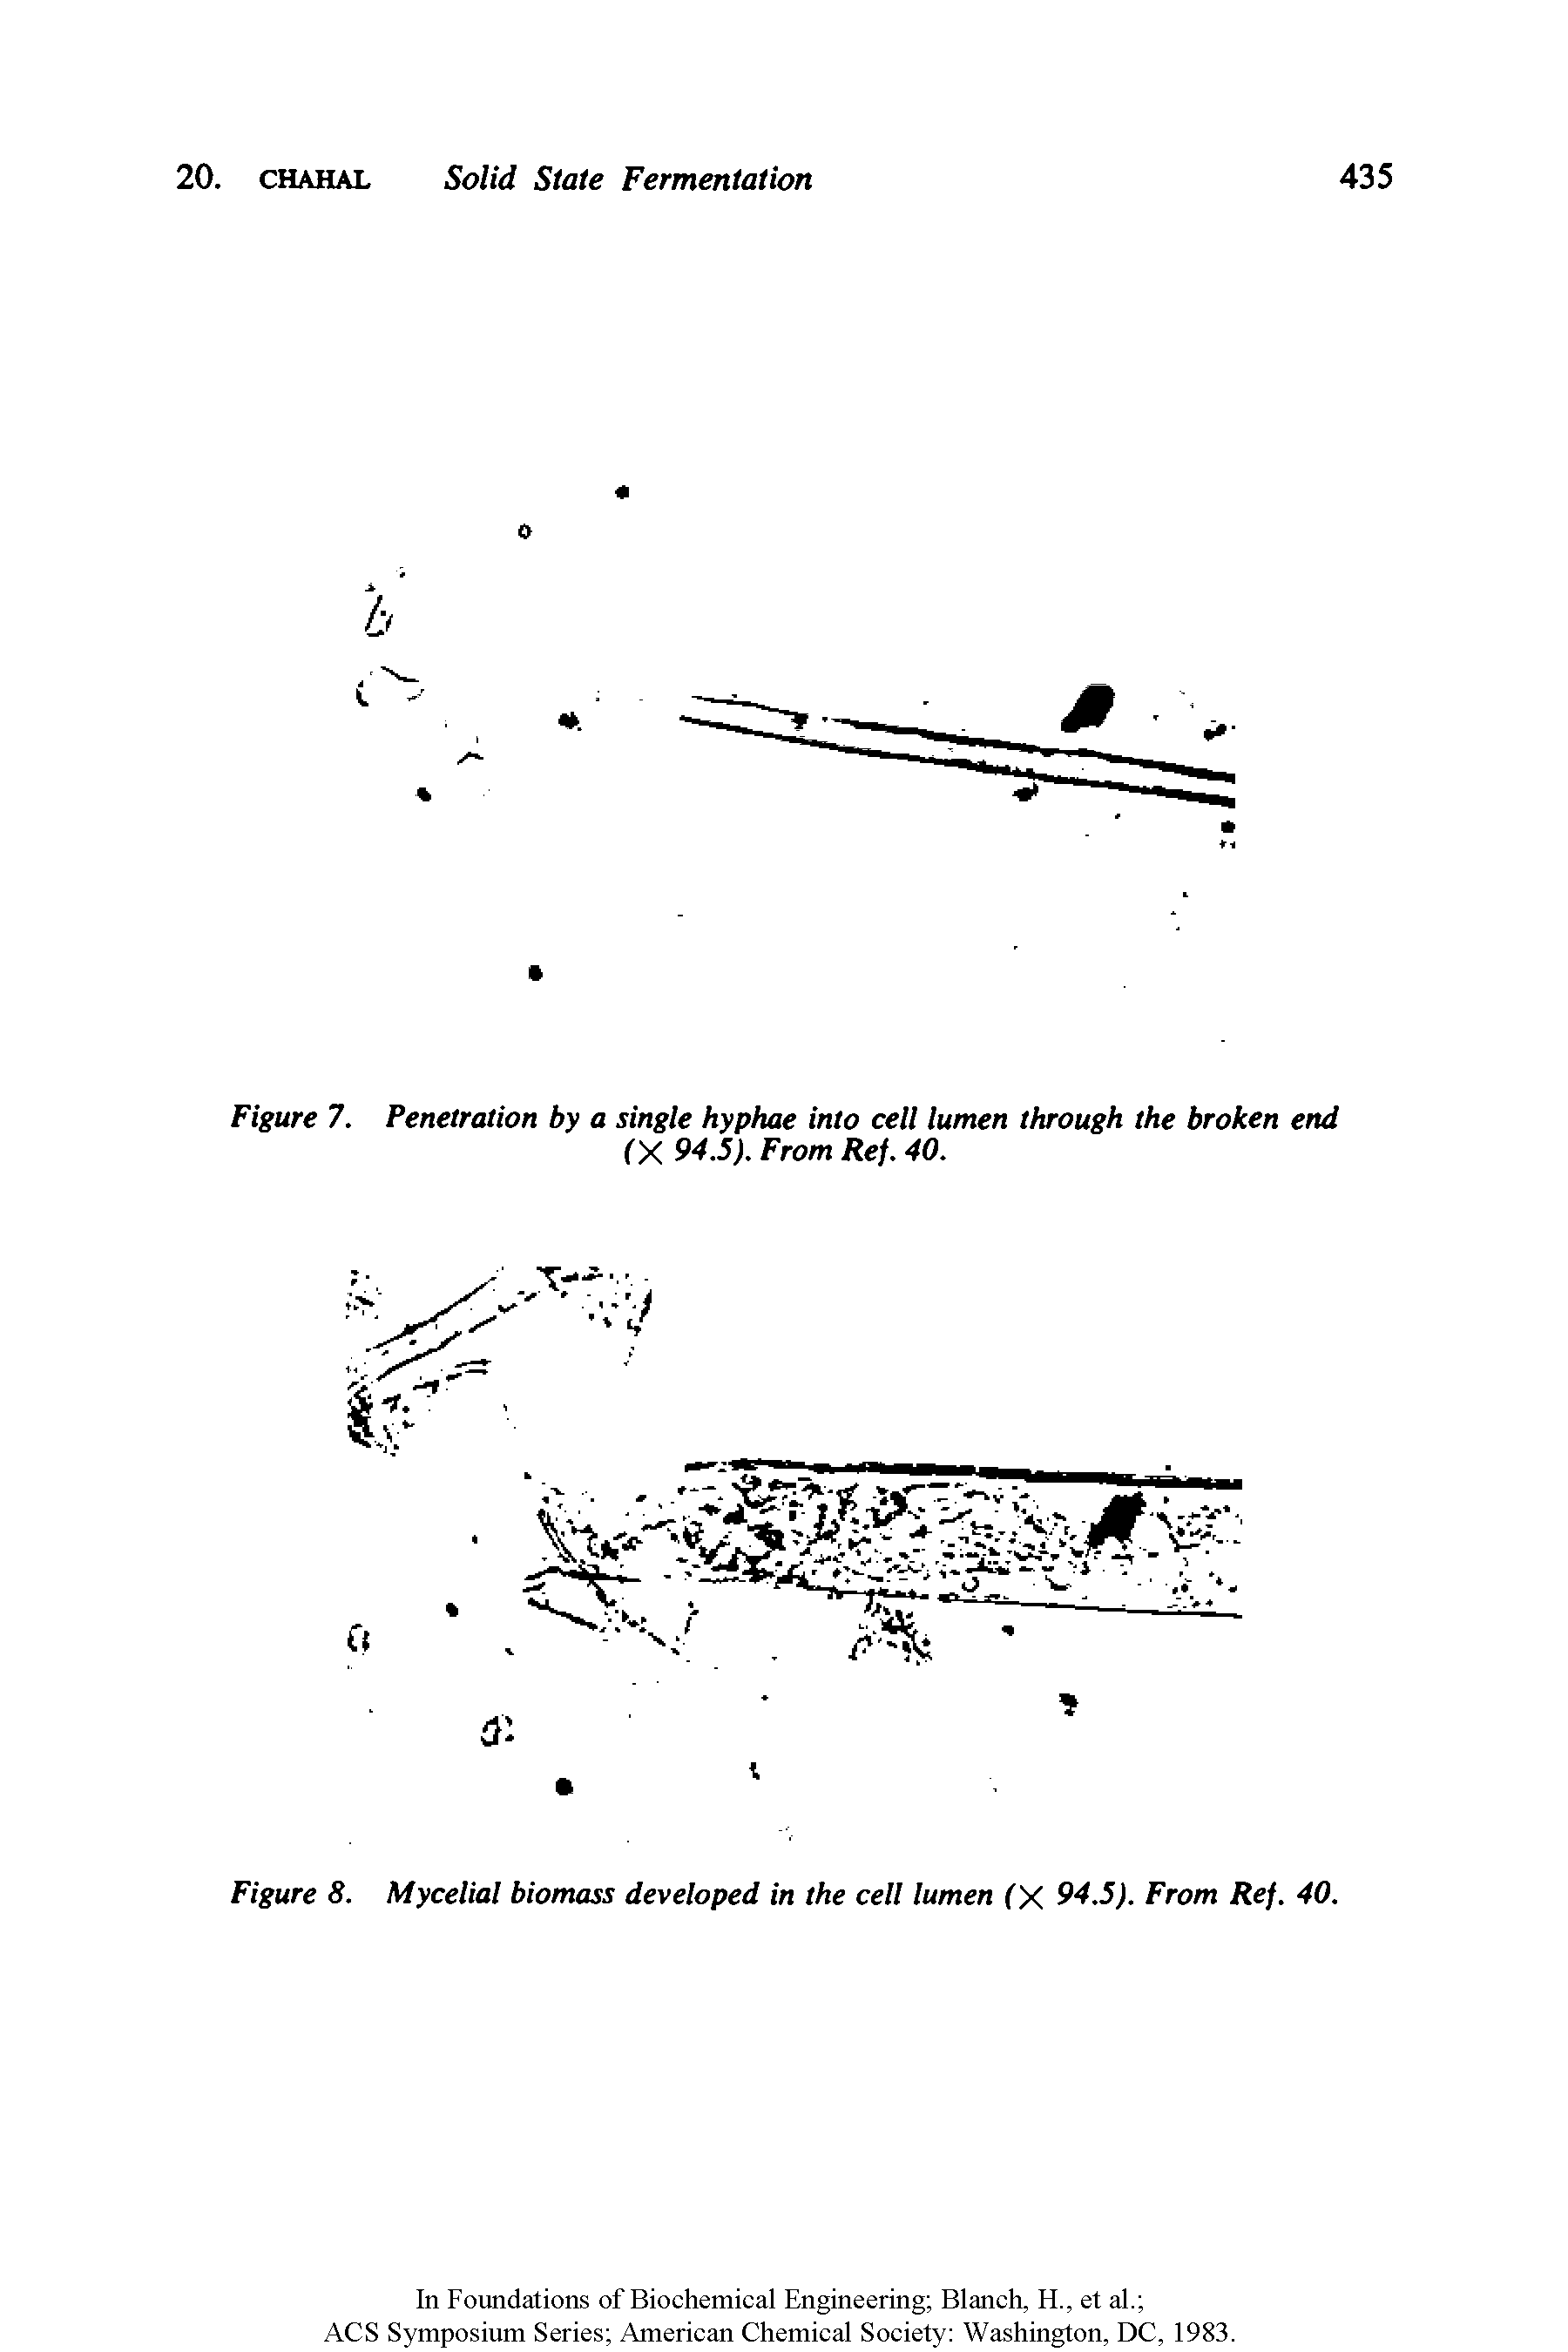 Figure 8. Mycelial biomass developed in the cell lumen (X 94.5). From Ref. 40.